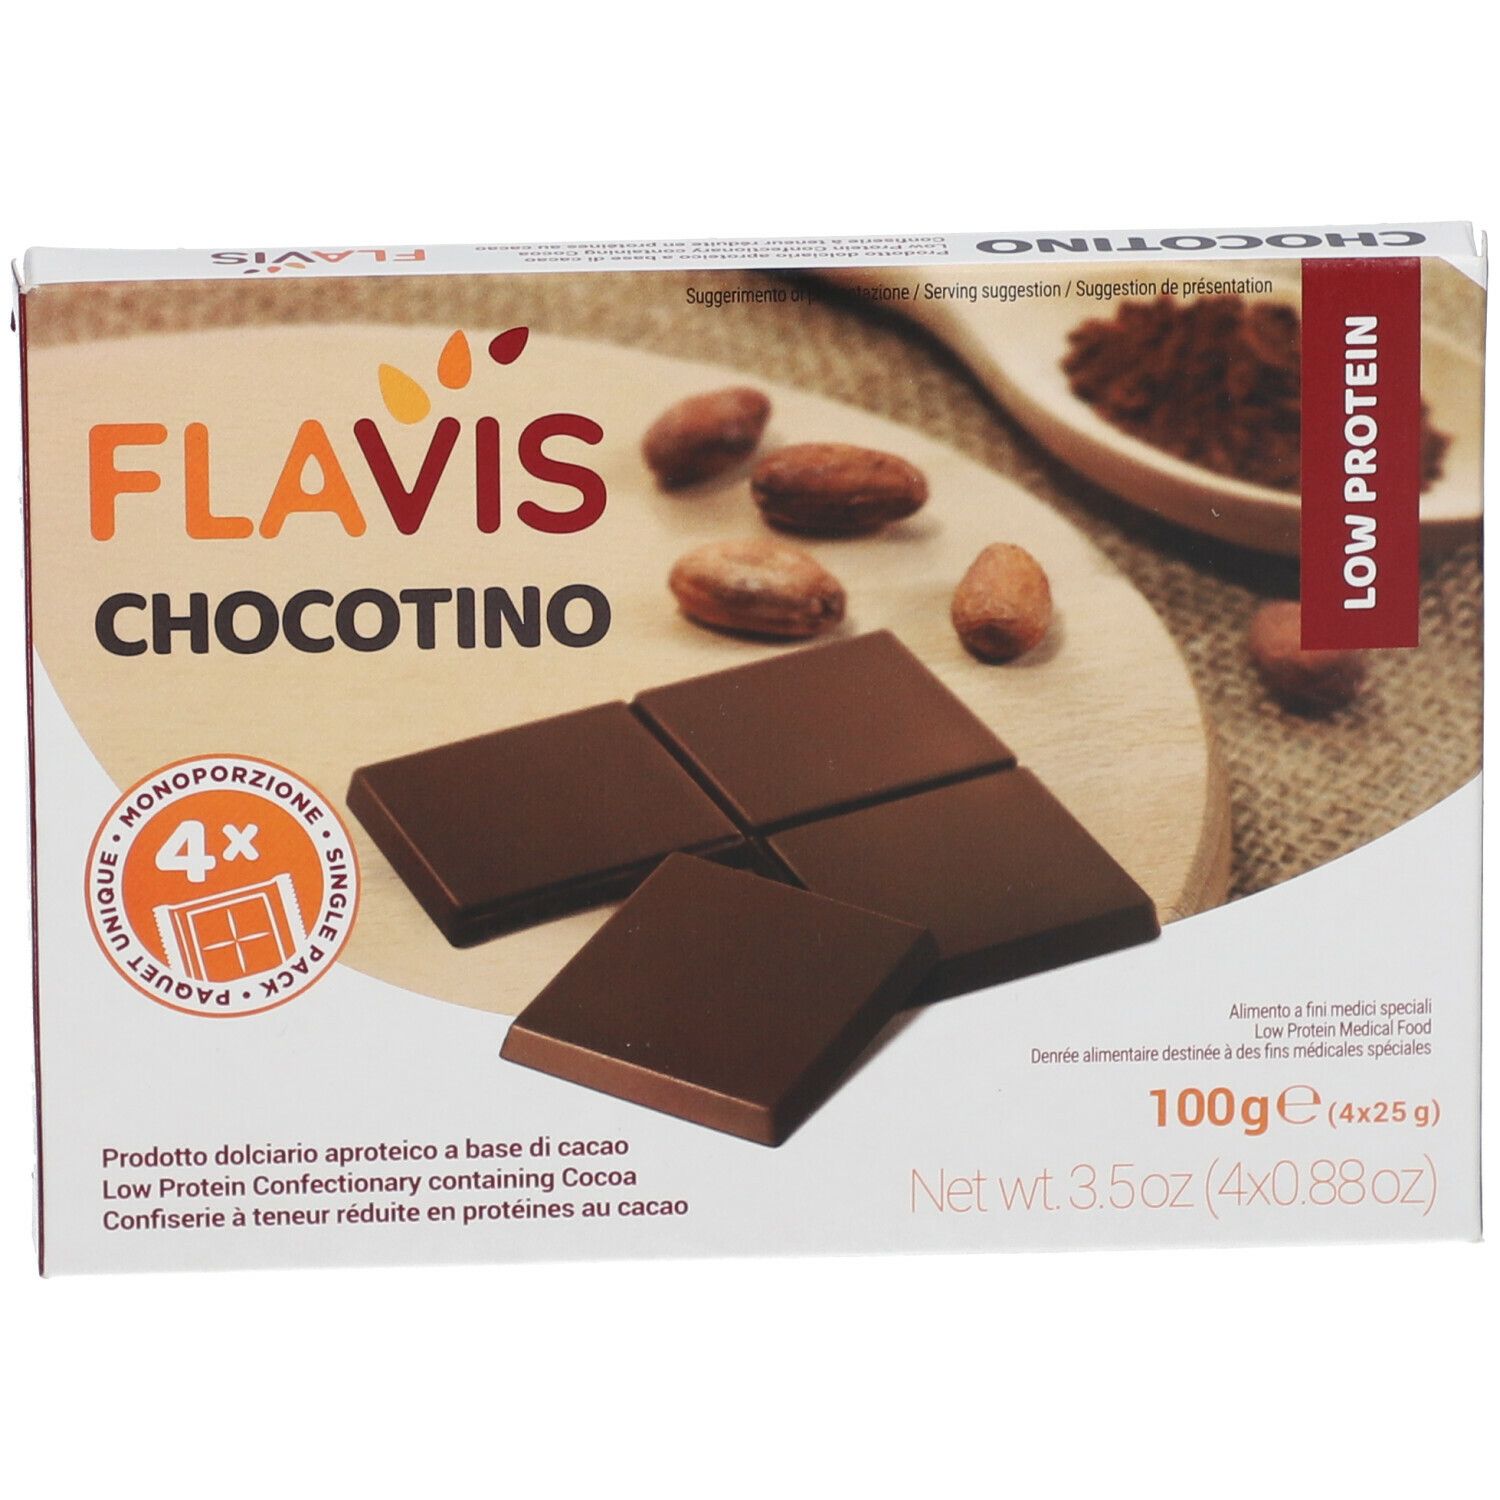 FLAVIS Chocotino